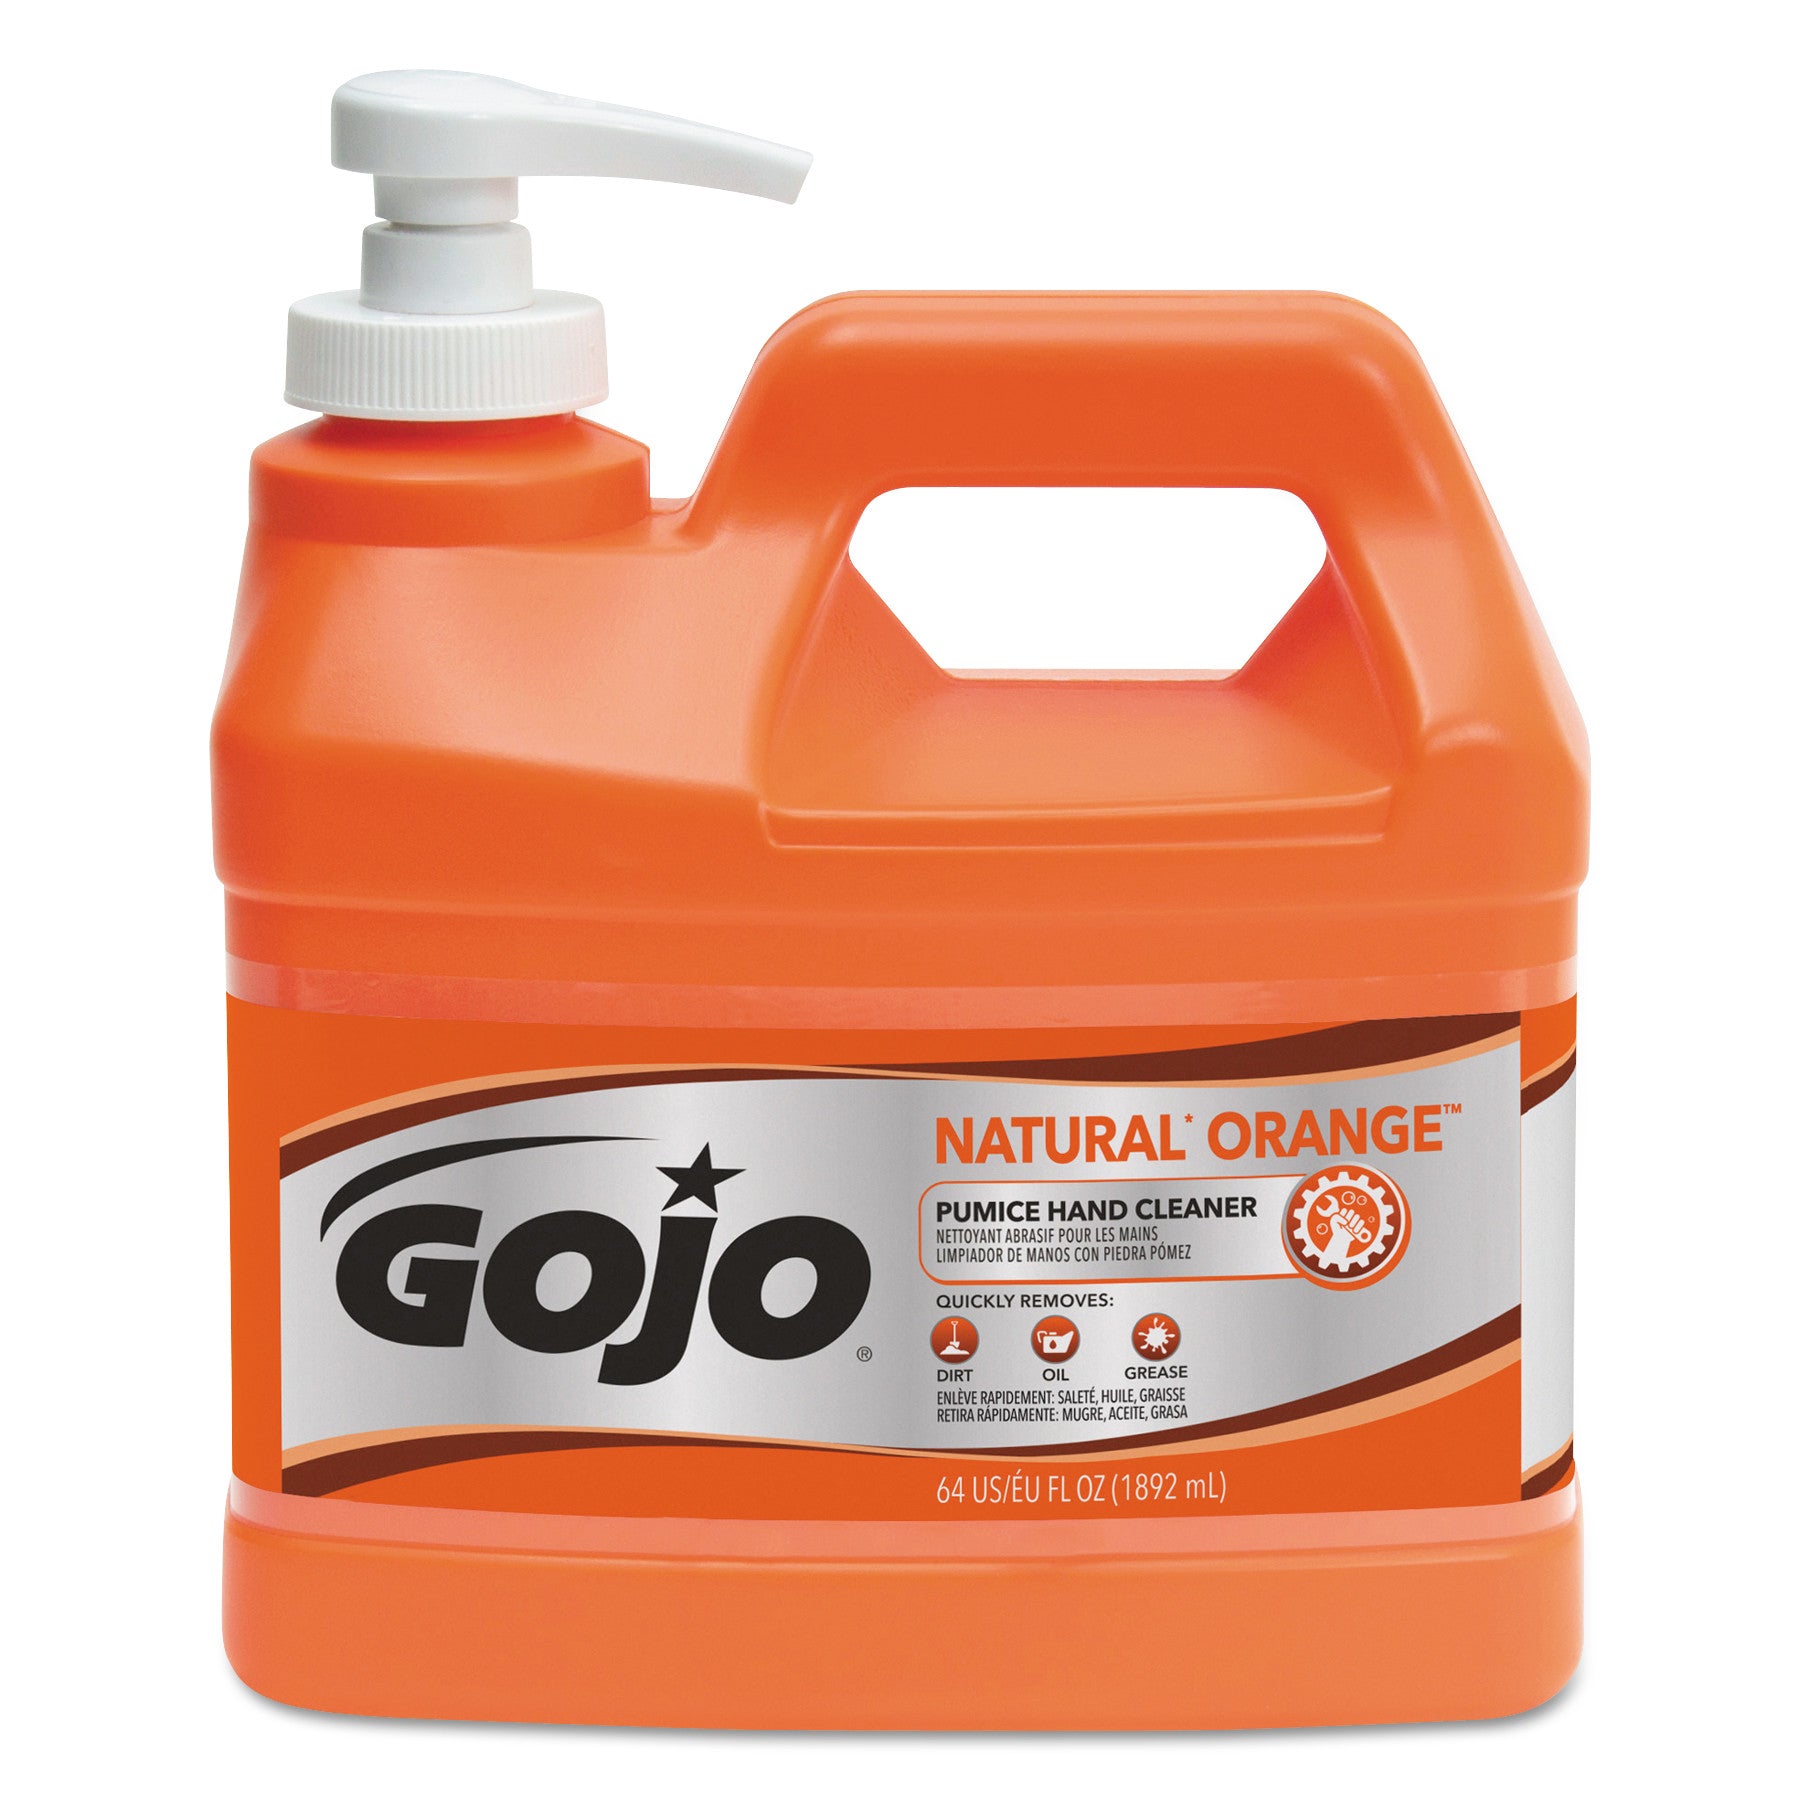 natural-orange-pumice-hand-cleaner-citrus-05-gal-pump-bottle-4-carton_goj095804 - 1